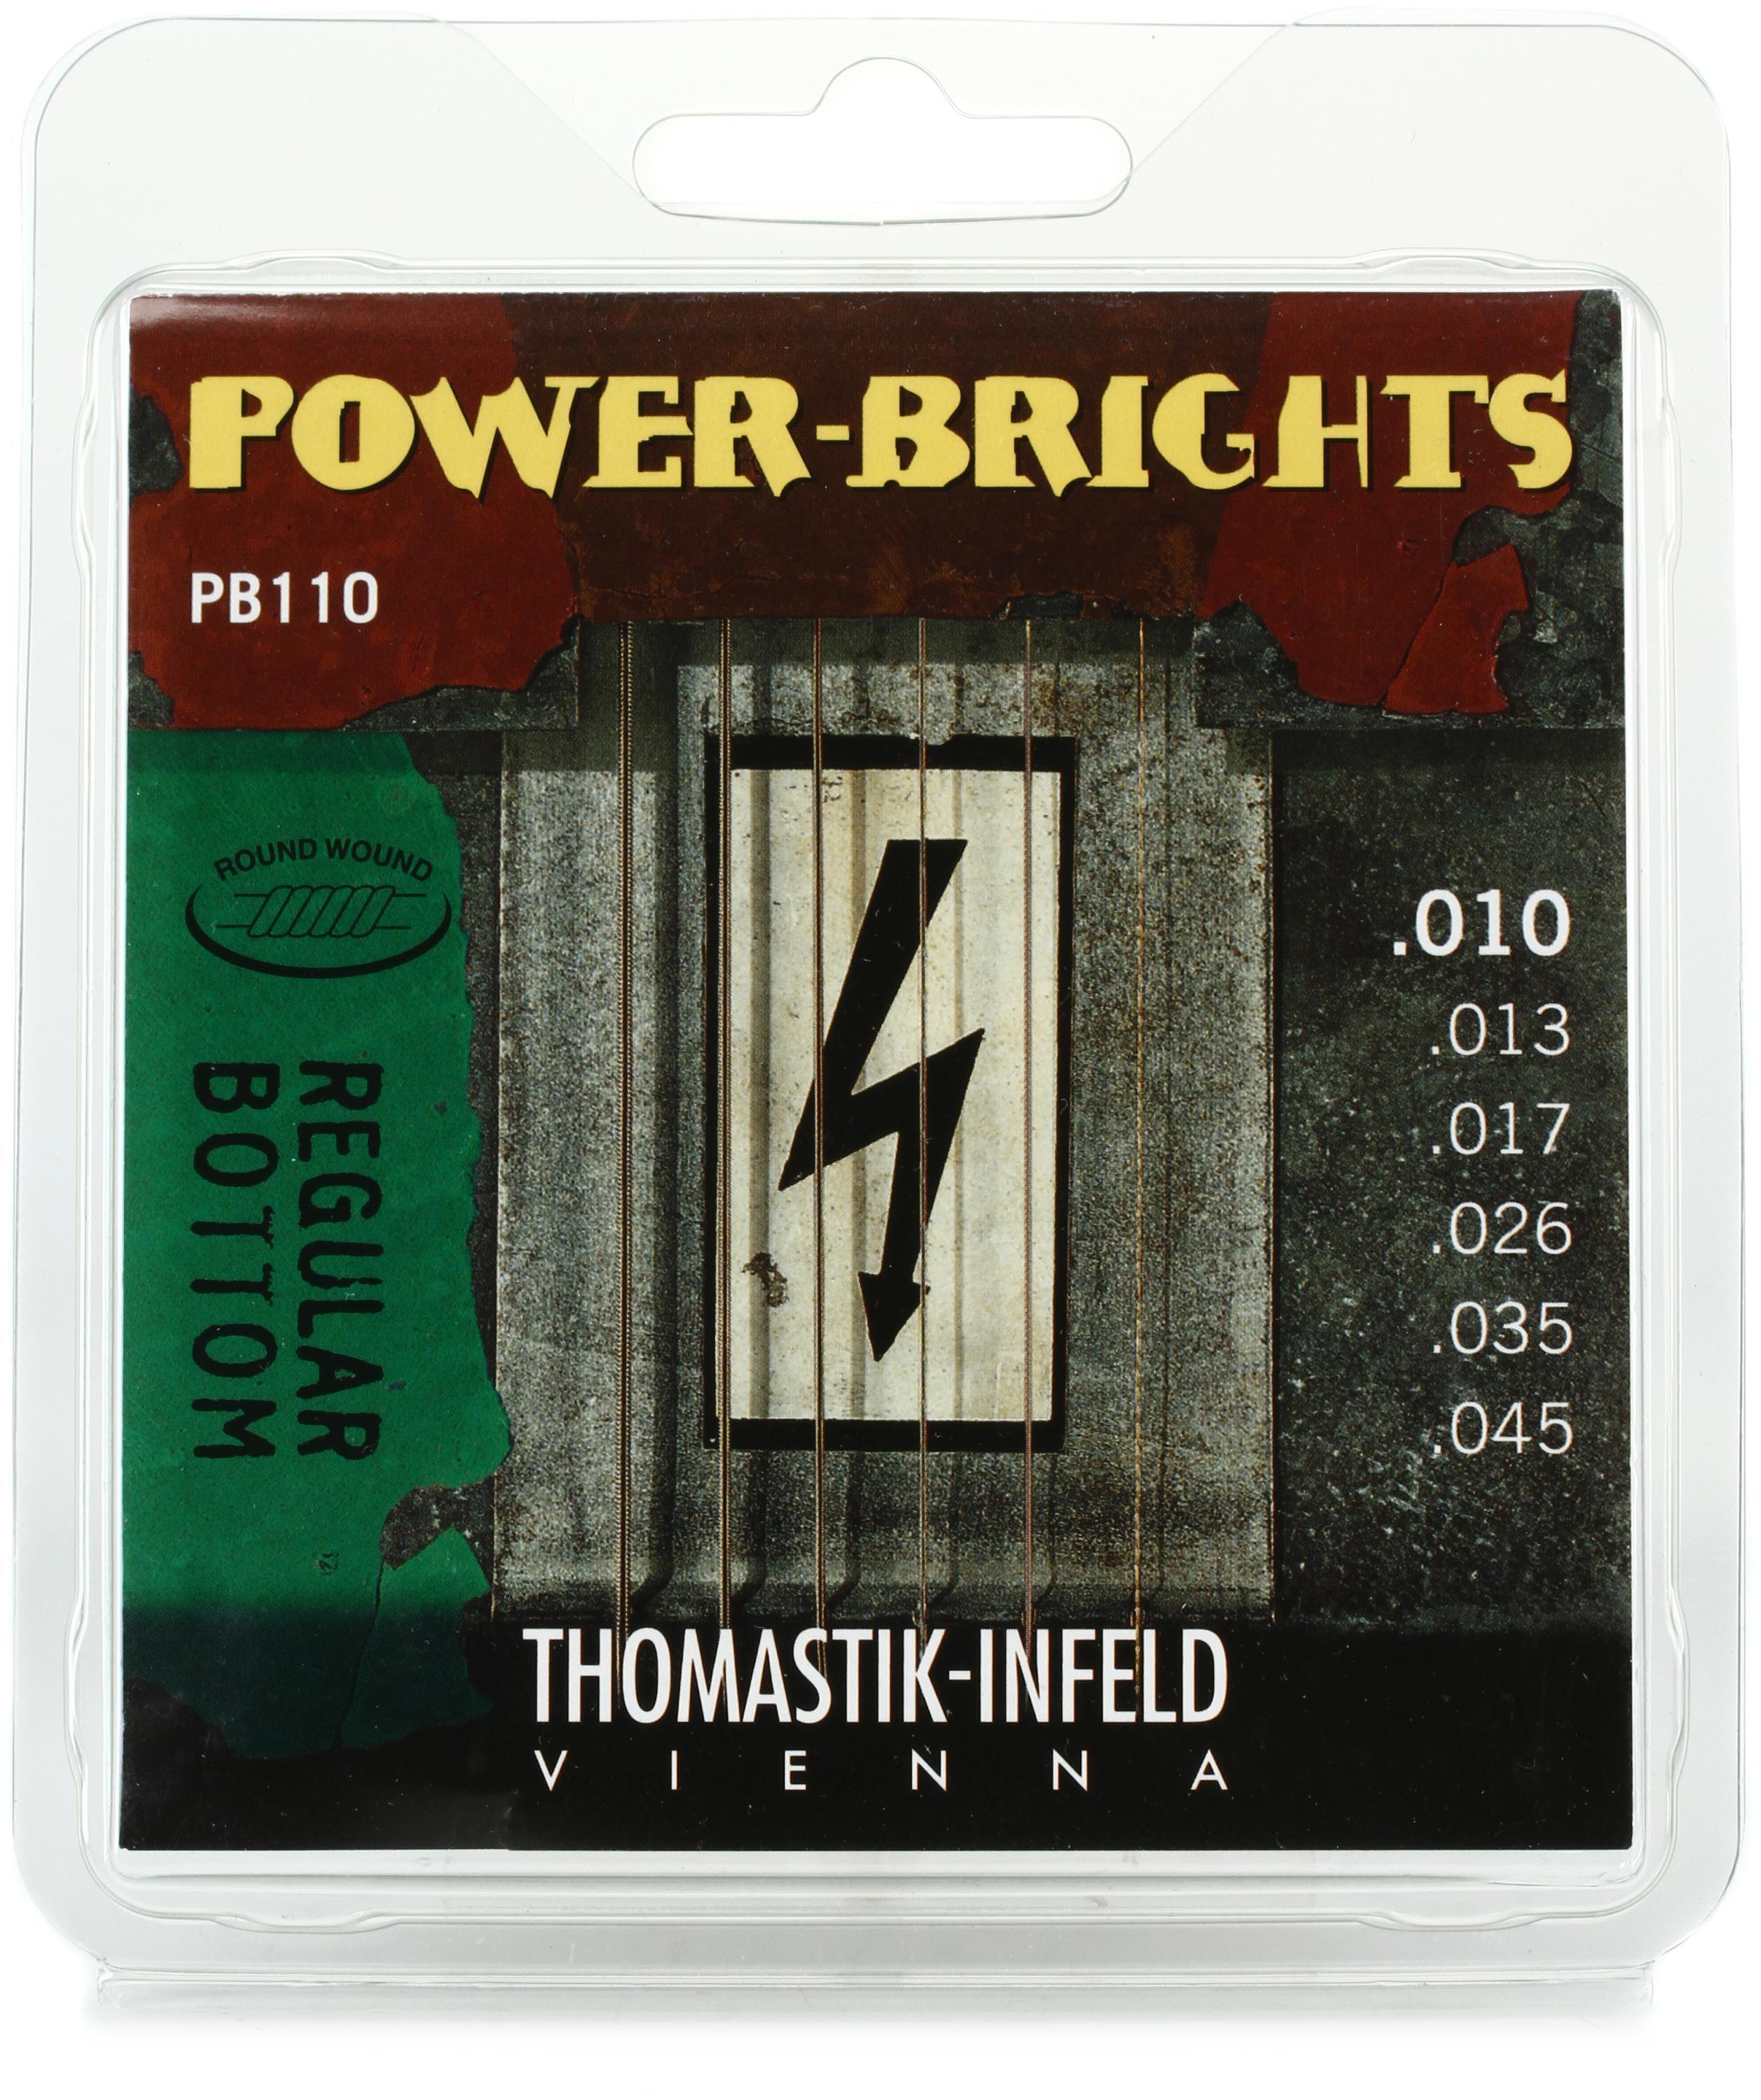 Thomastik-Infeld PB110 Power-Brights Electric Guitar Strings